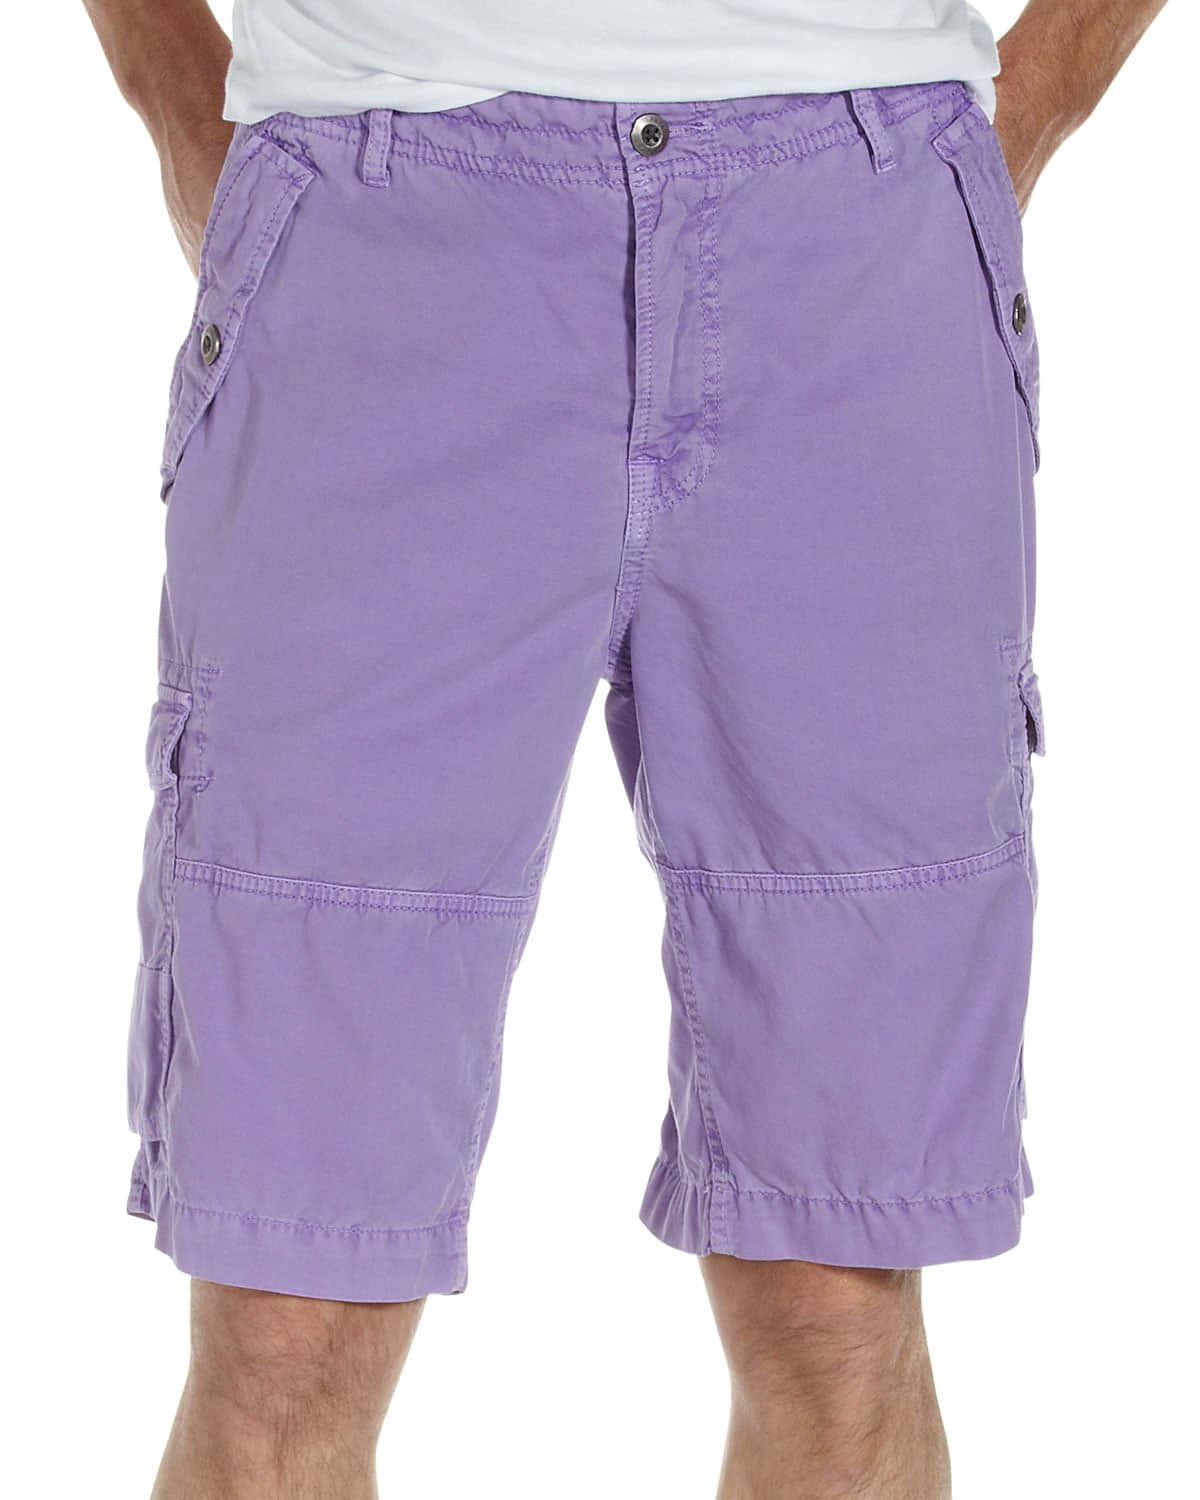 A pair of Purple Shorts Wallpaper